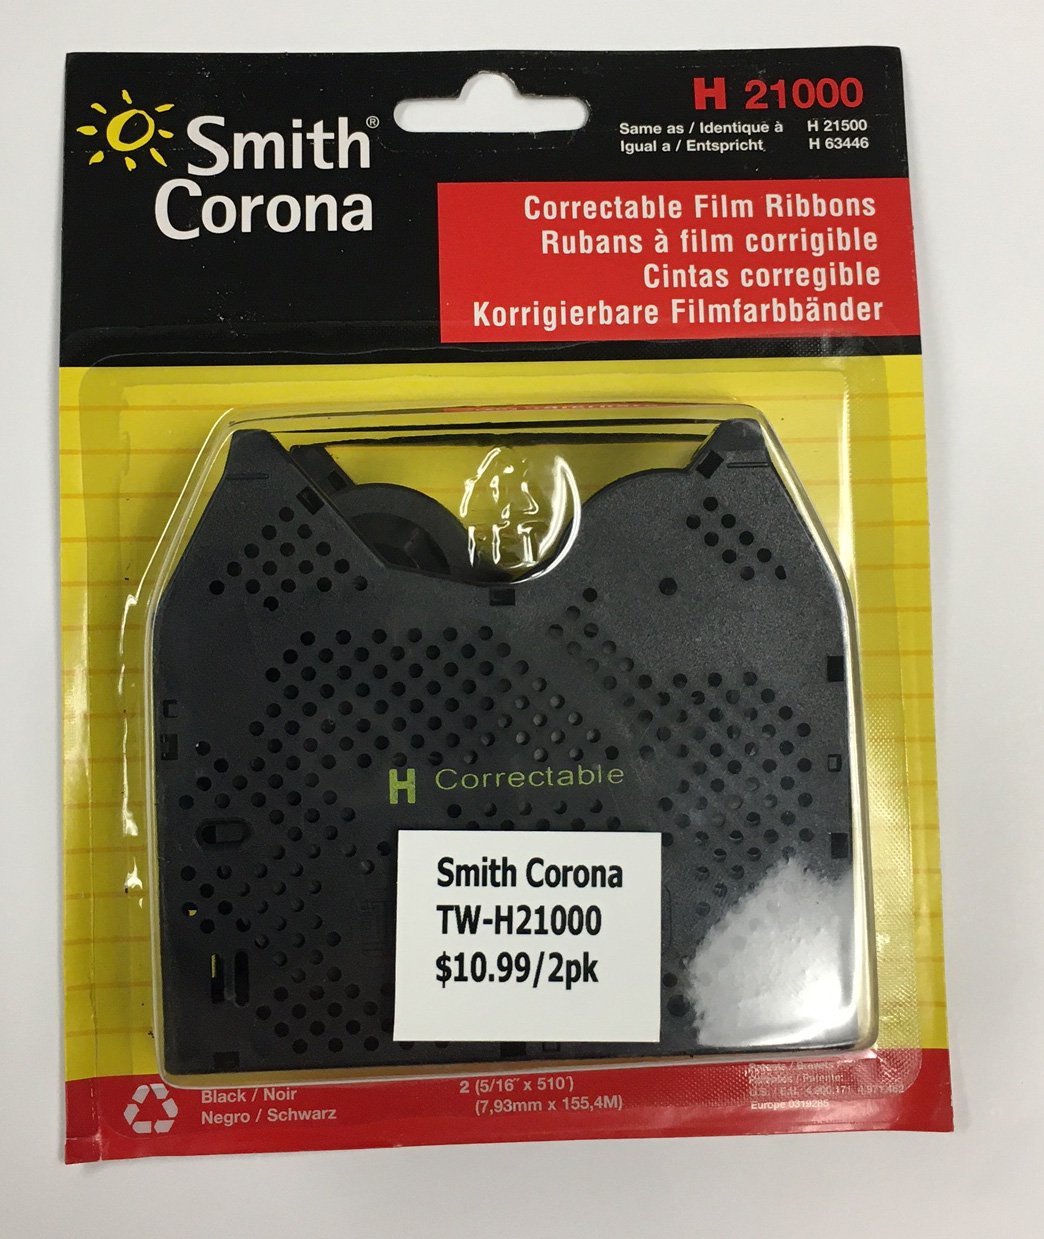 2 pack New Genuine Smith Corona H Series 21000 Correctable Typewriter Ribbon 